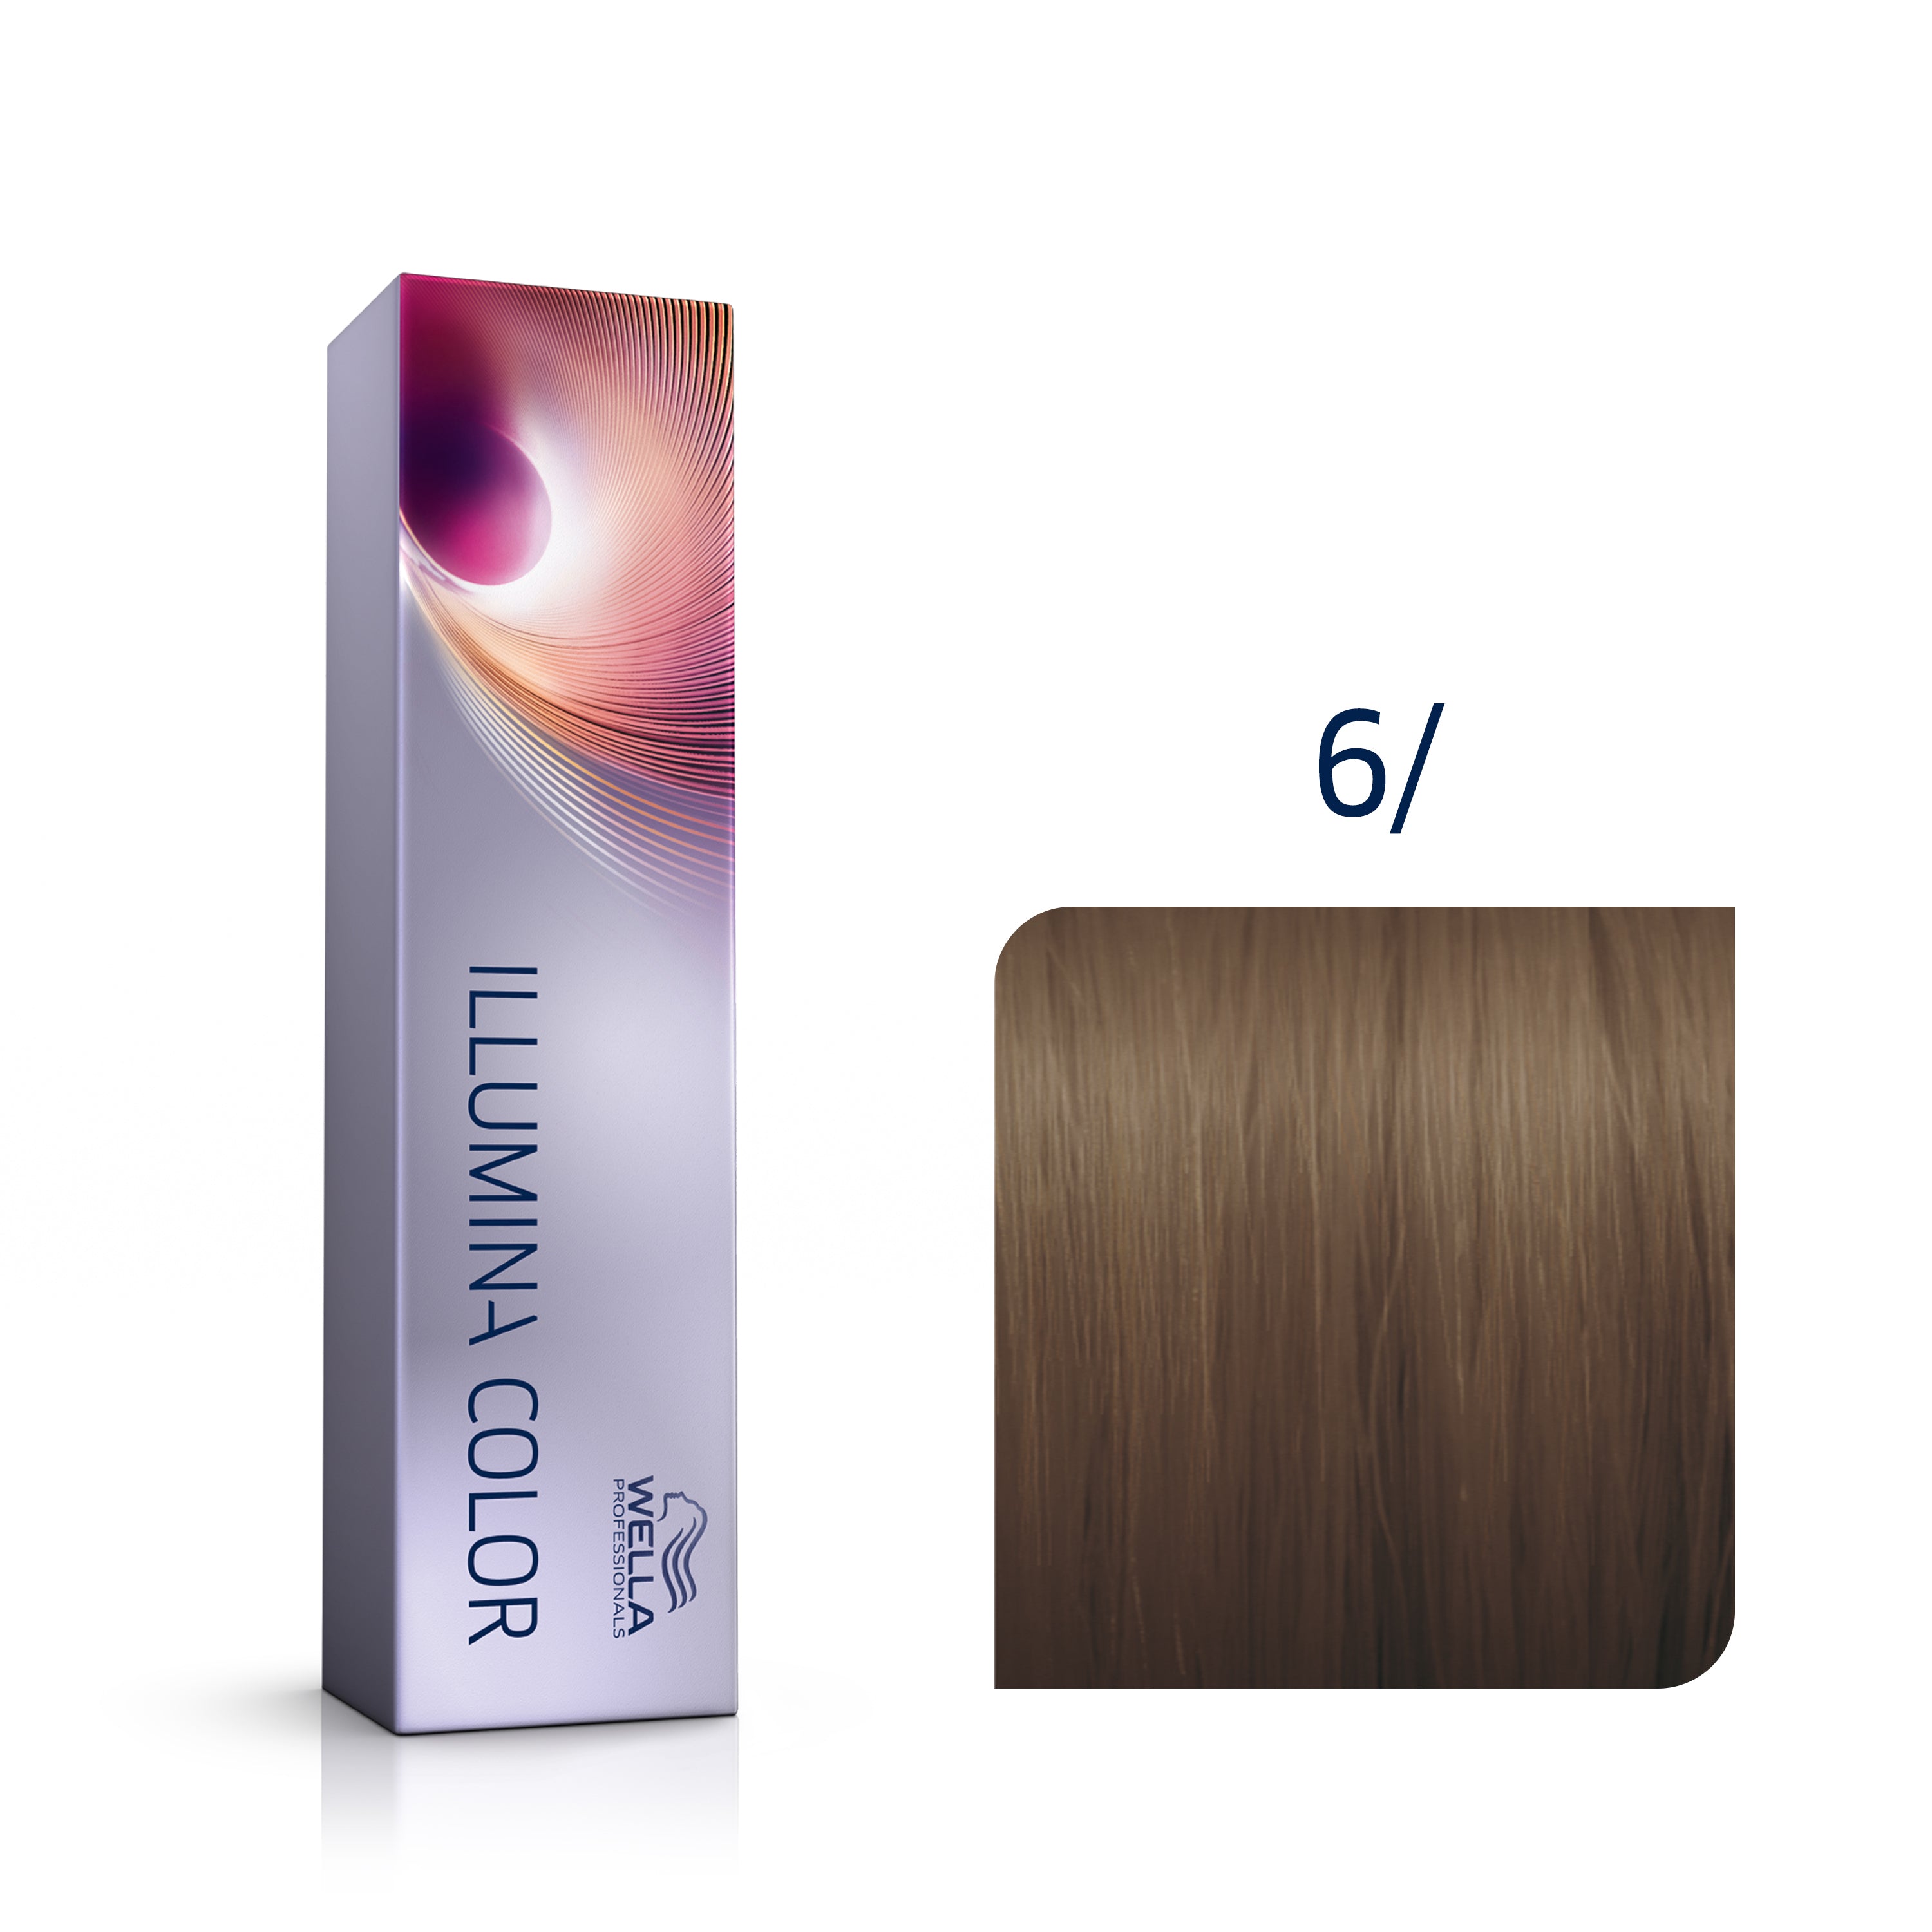 Wella Professional Illumina 6/ dark blonde 60 ml